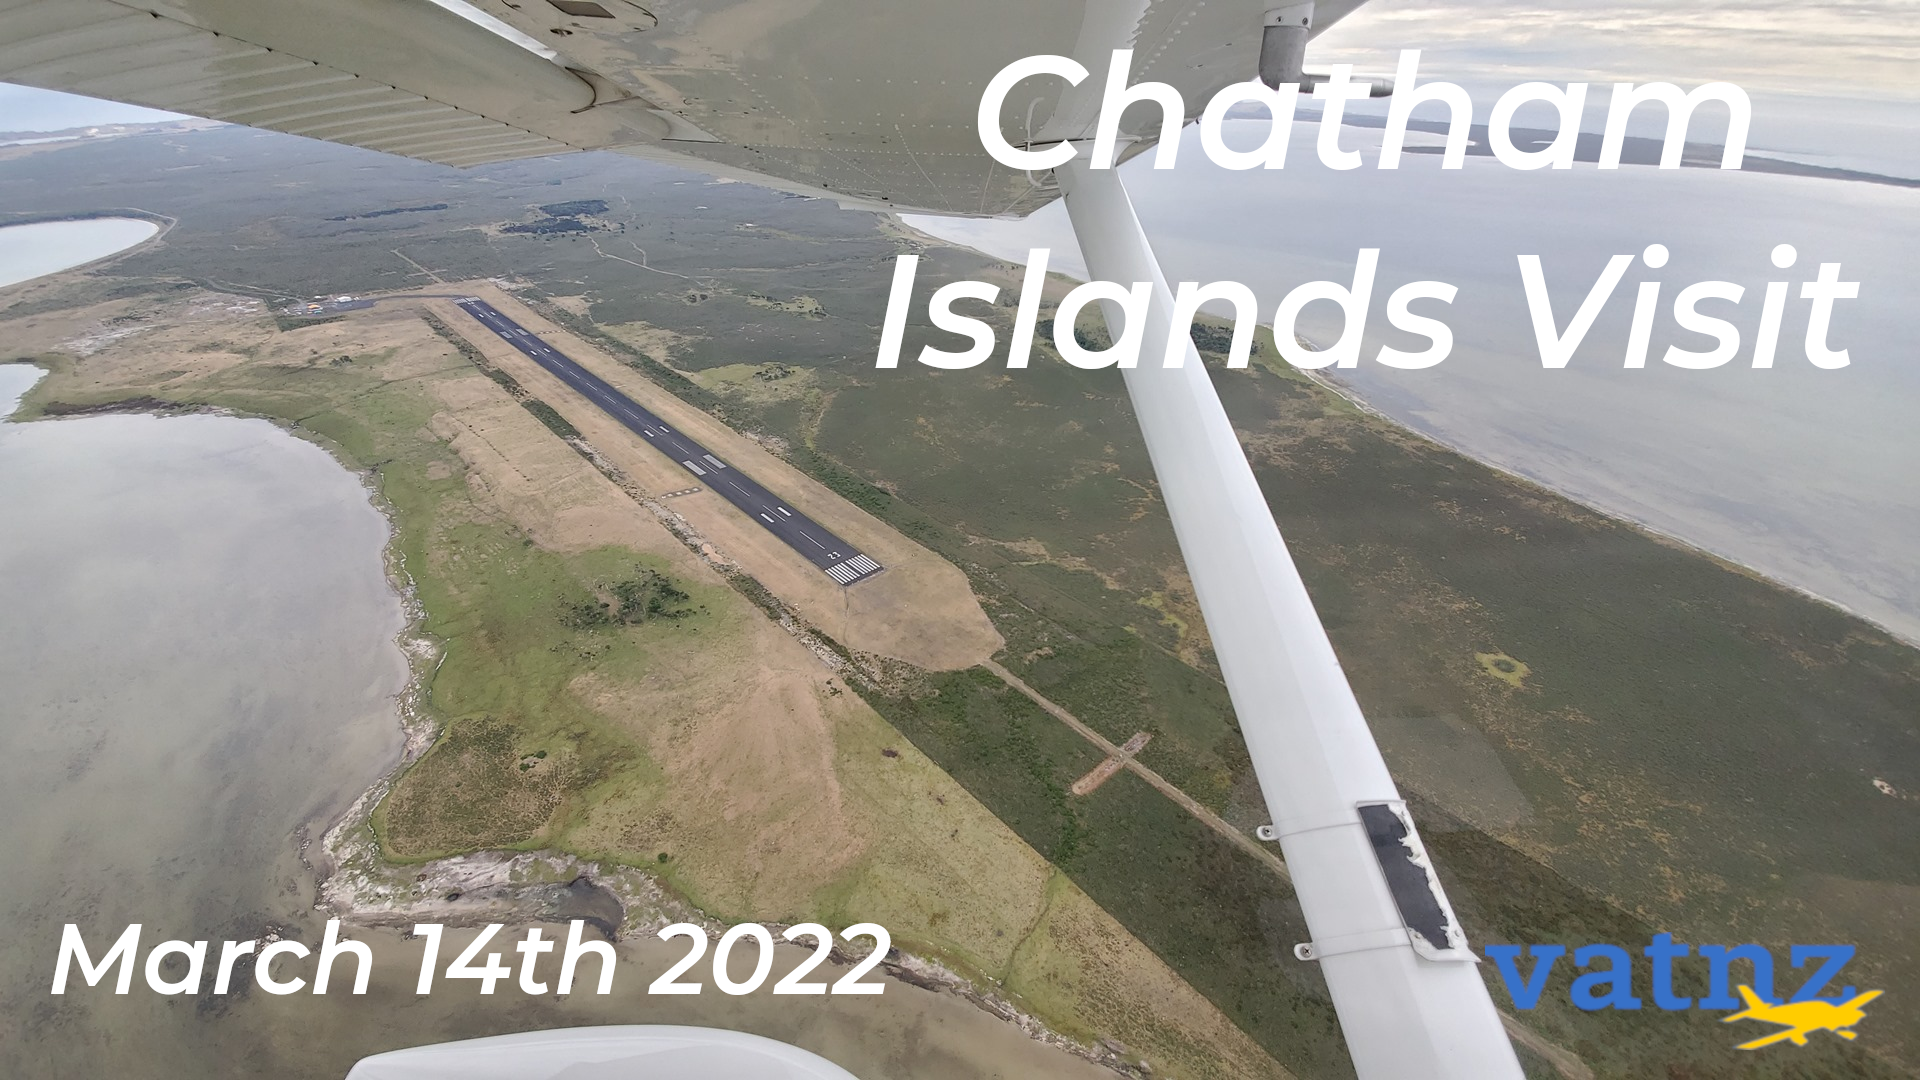 Chatham Islands Visit